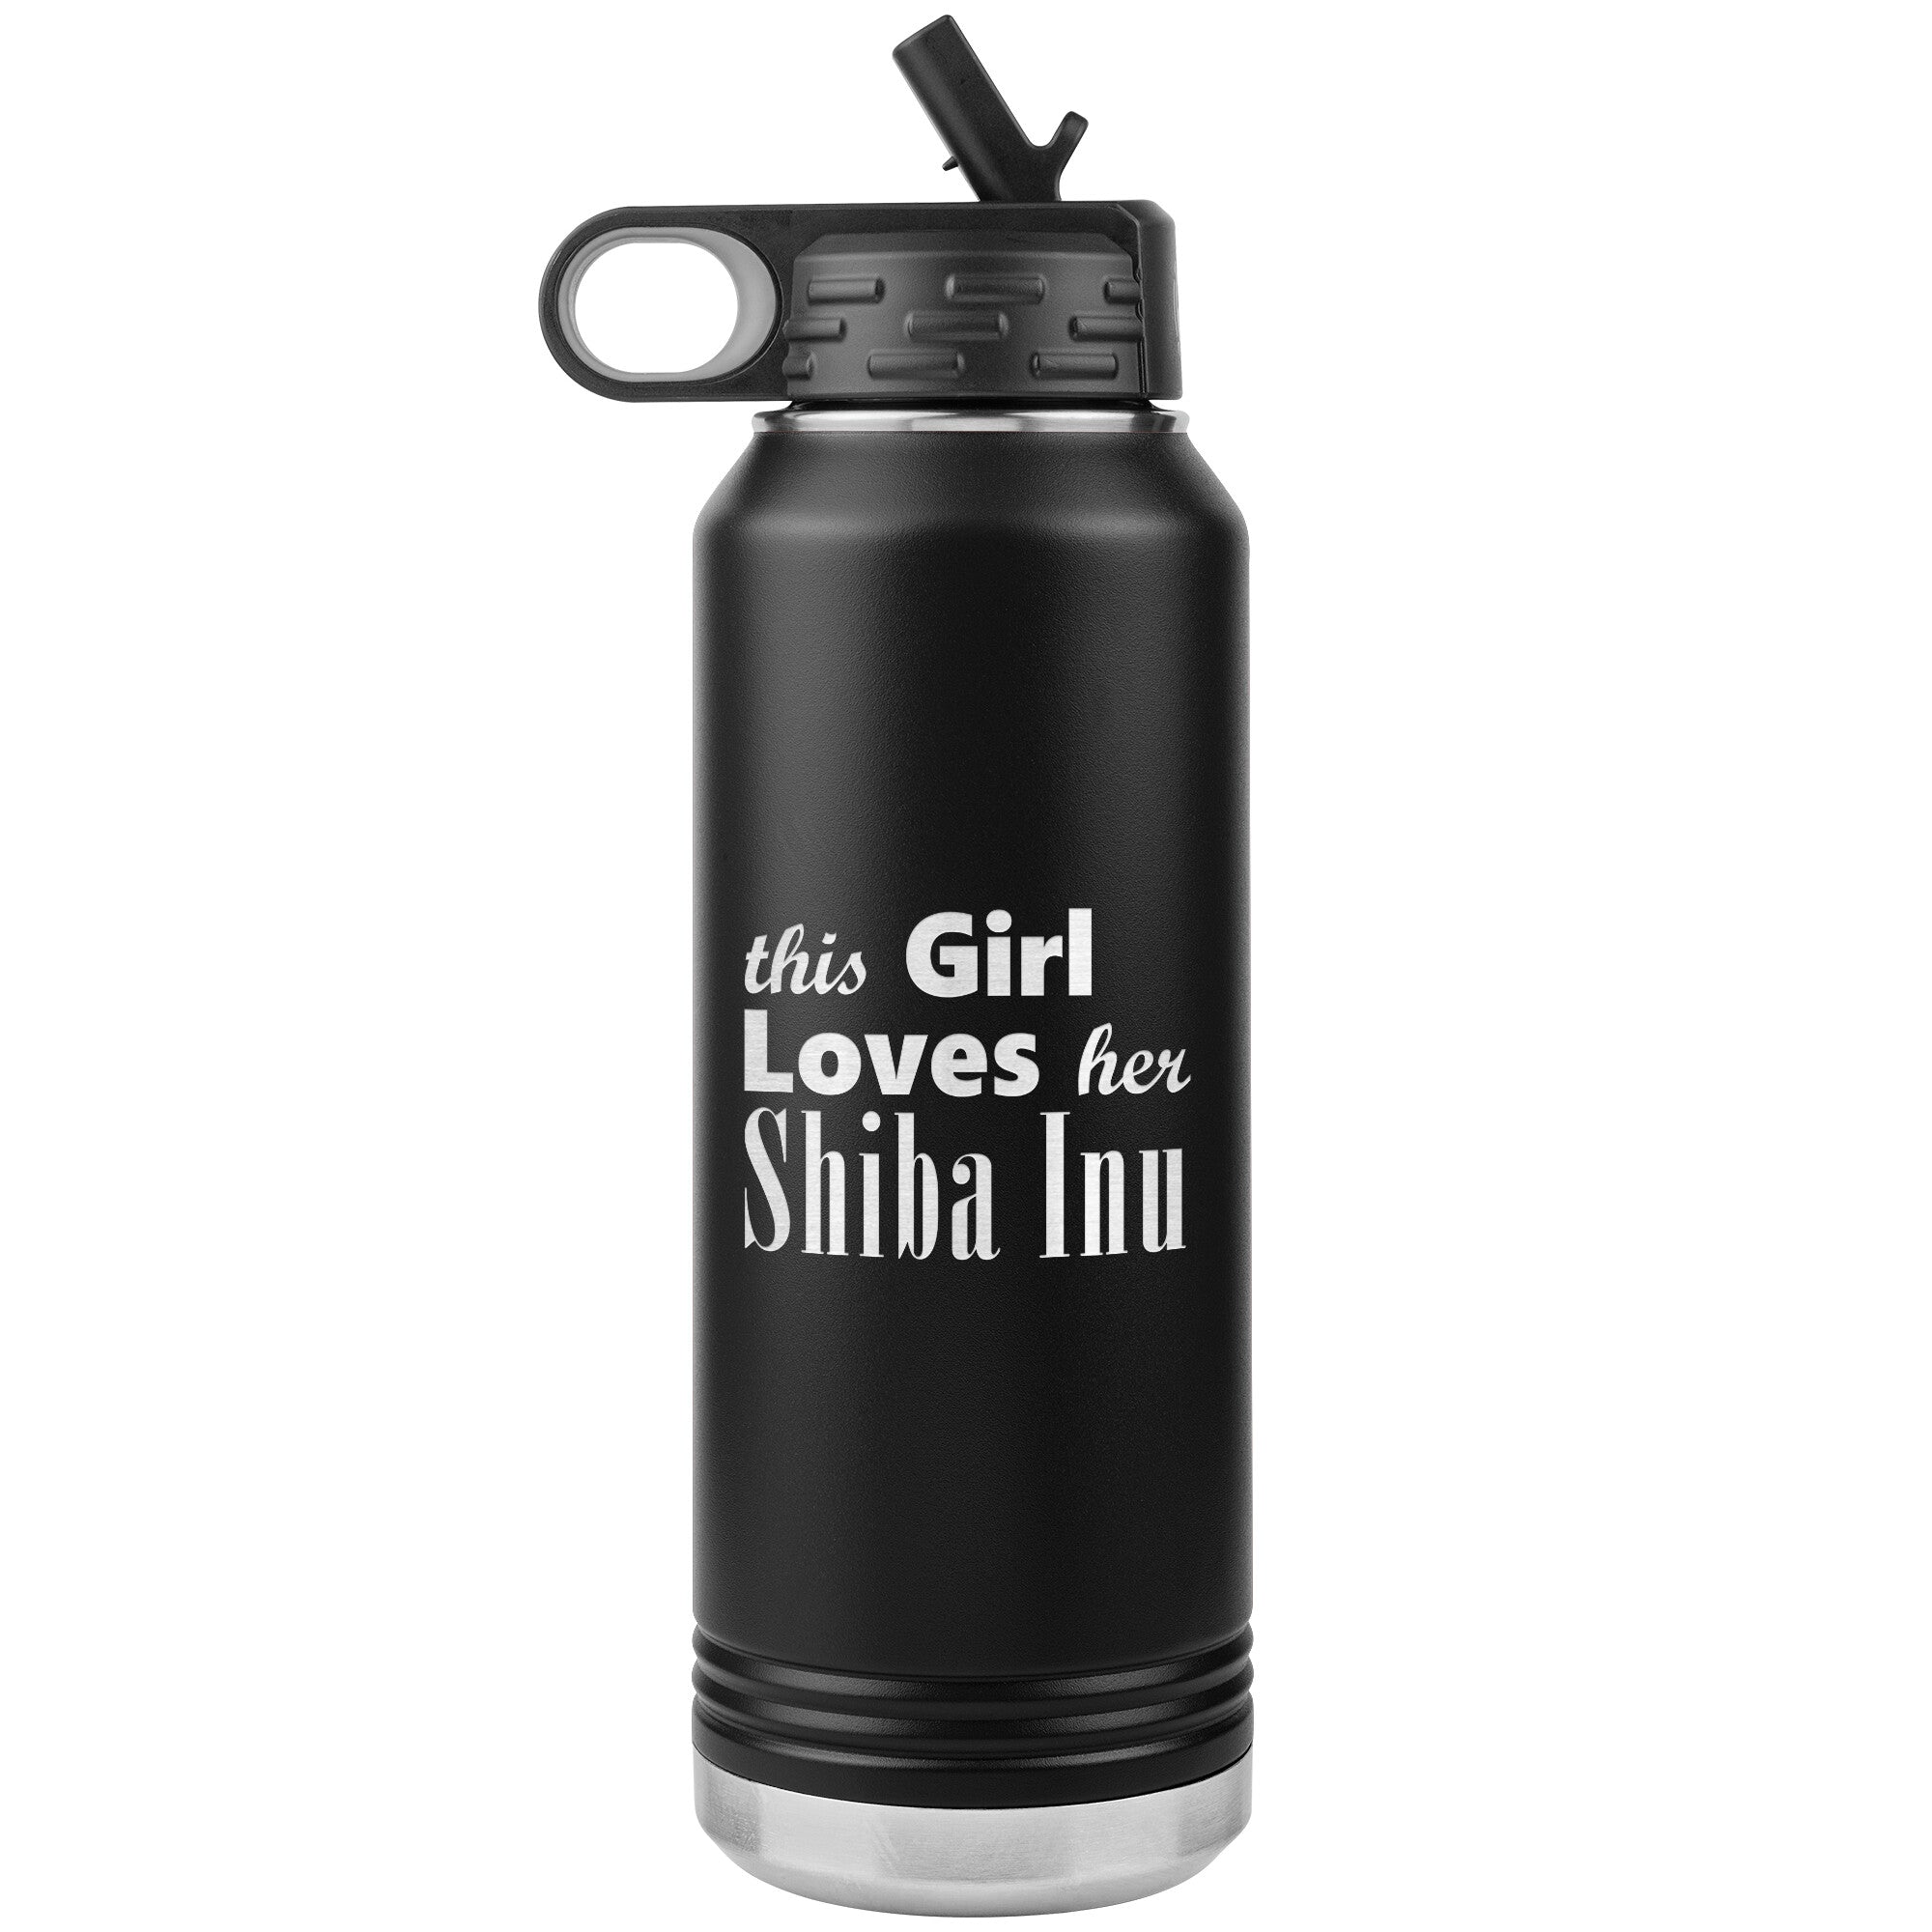 Shiba Inu - 32oz Insulated Water Bottle